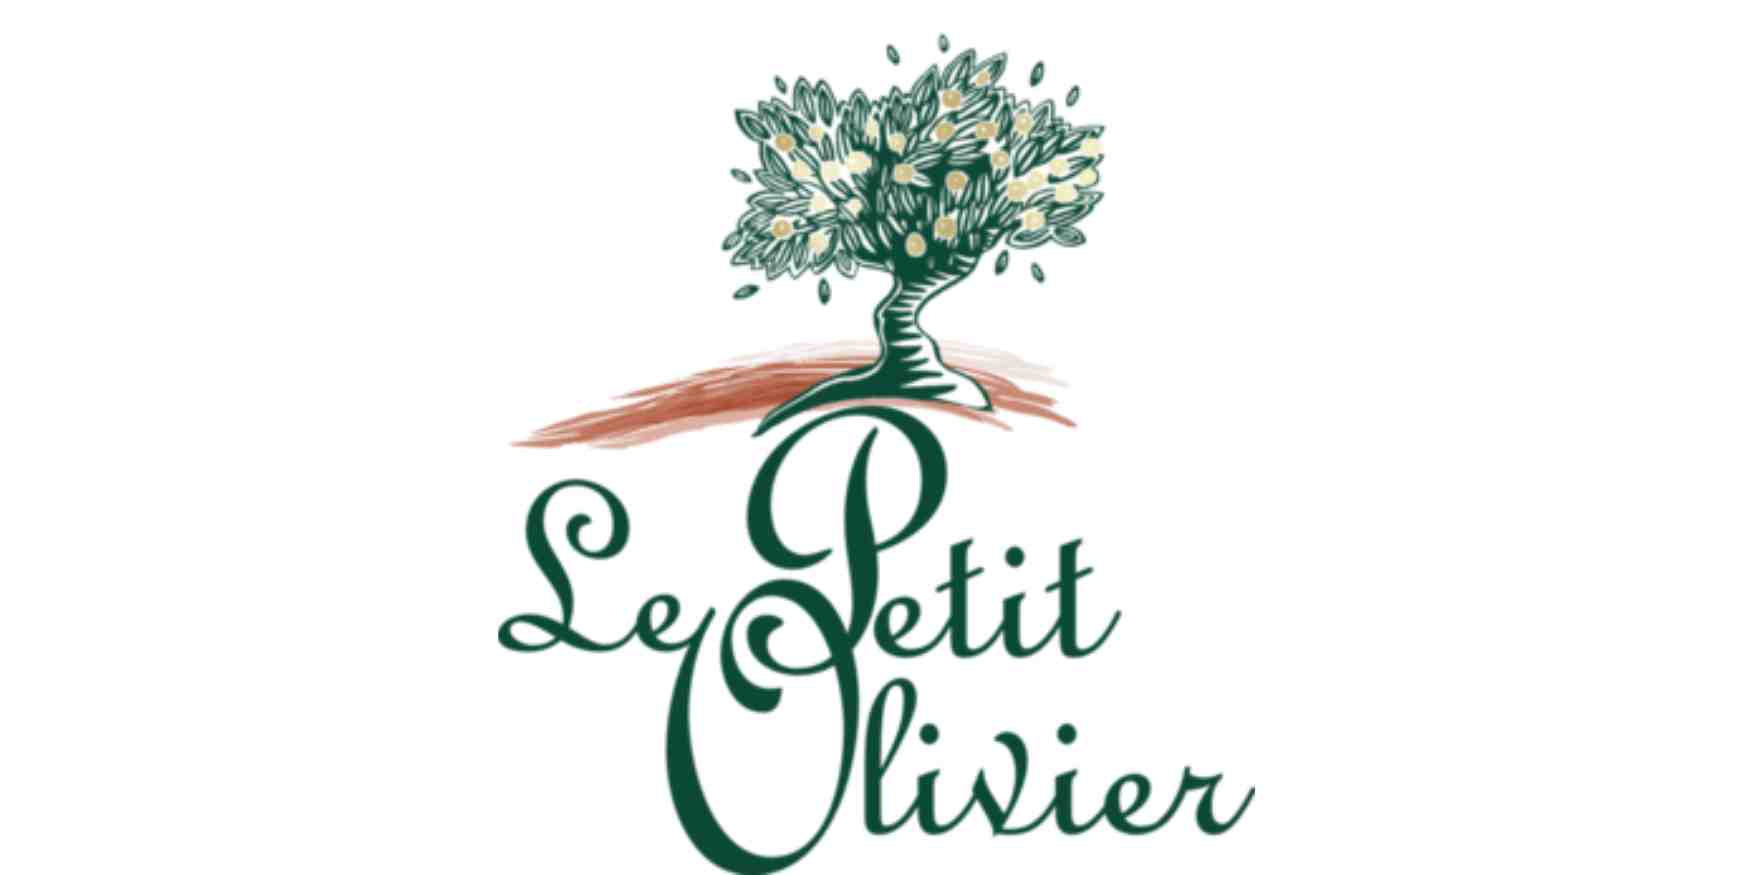 Logo Le Petit Olivier